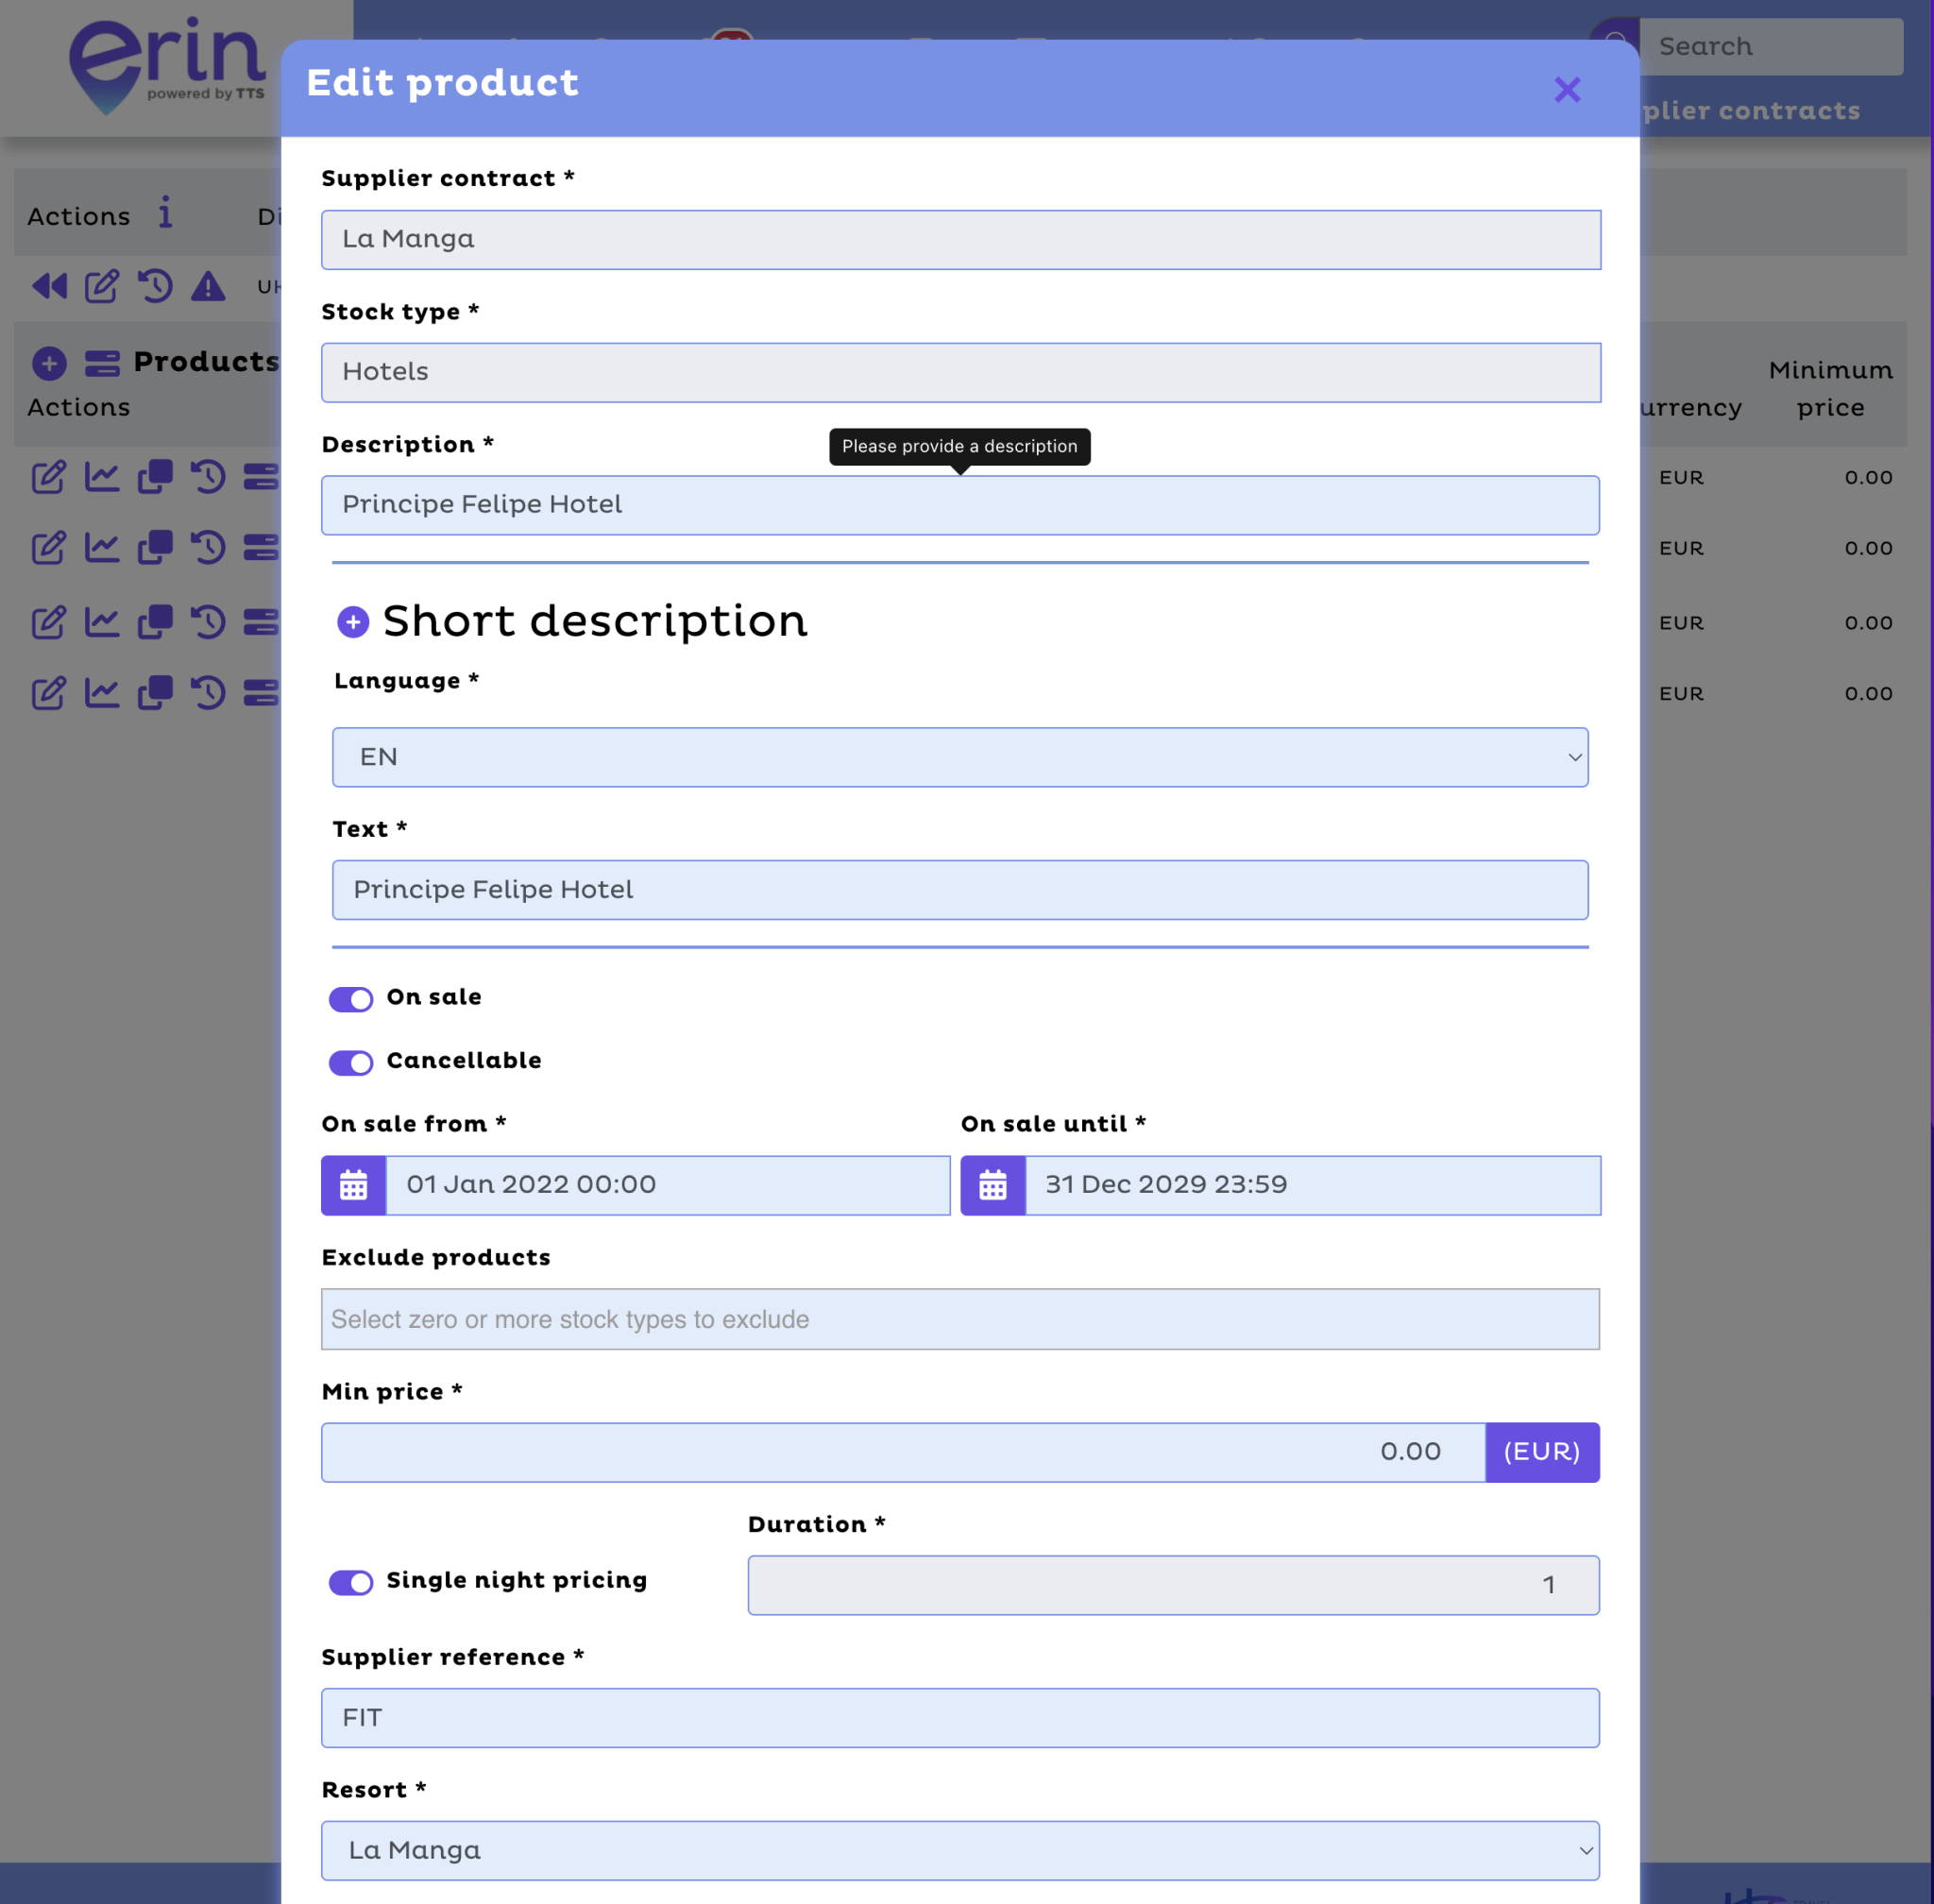 ERIN - Supplier contract